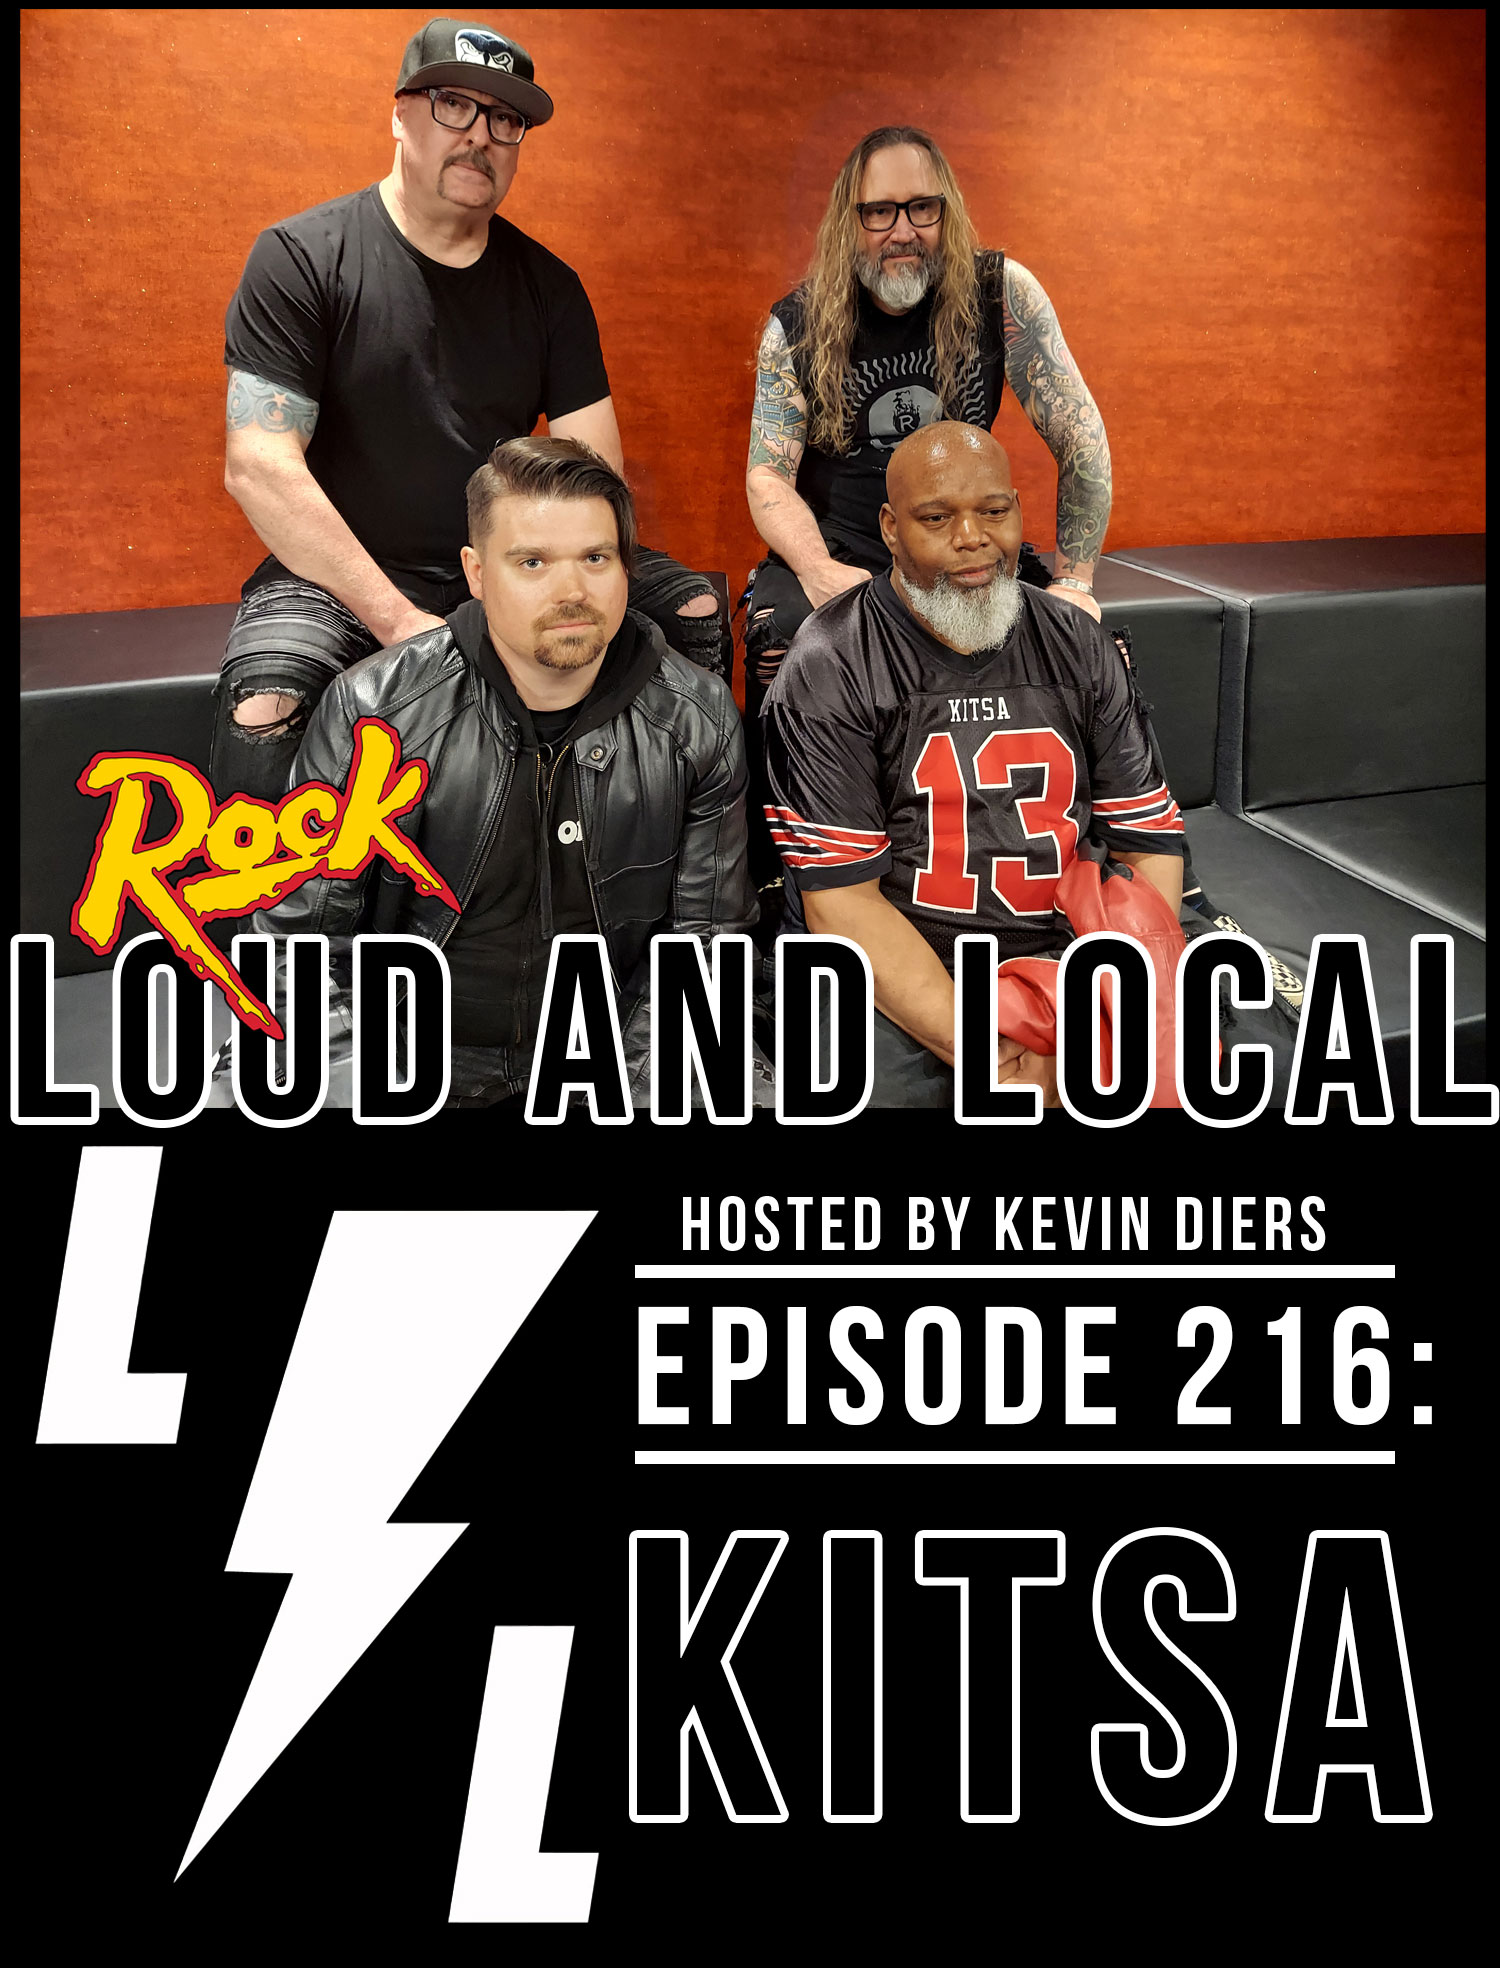 Loud and Local - Episode 216 - KITSA